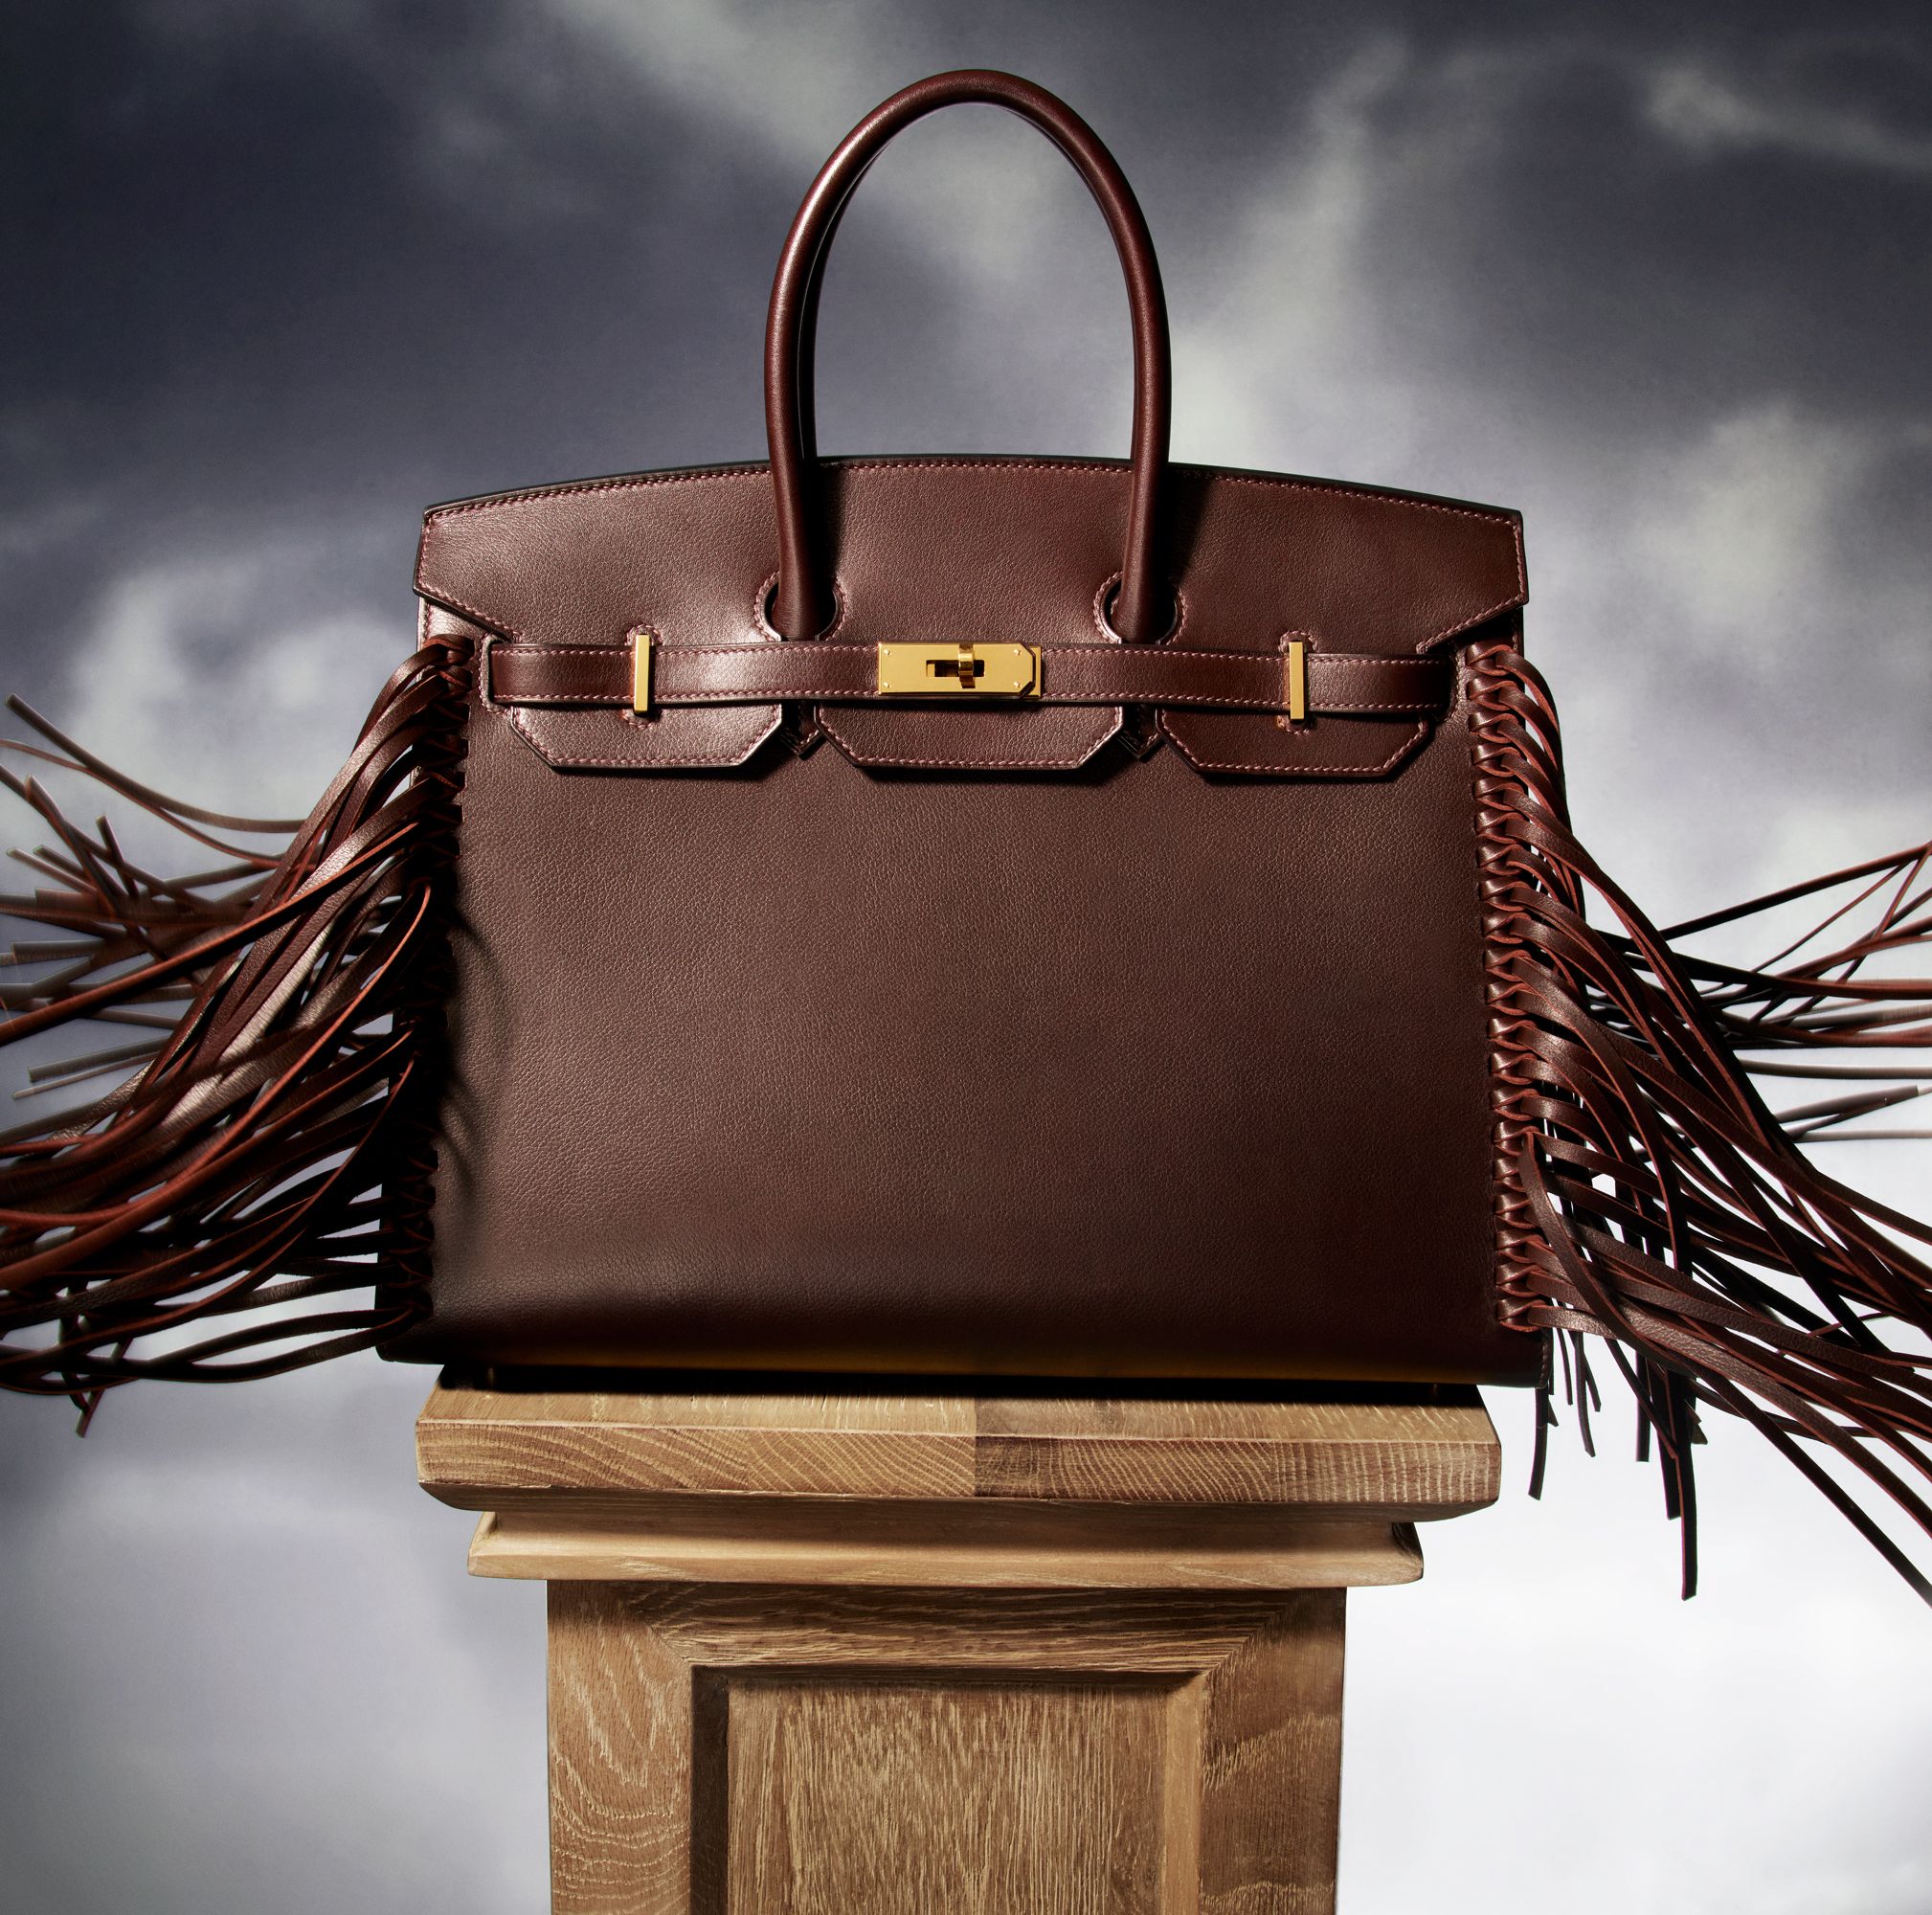 All about the Hermès Birkin bag collection | Hermès UK